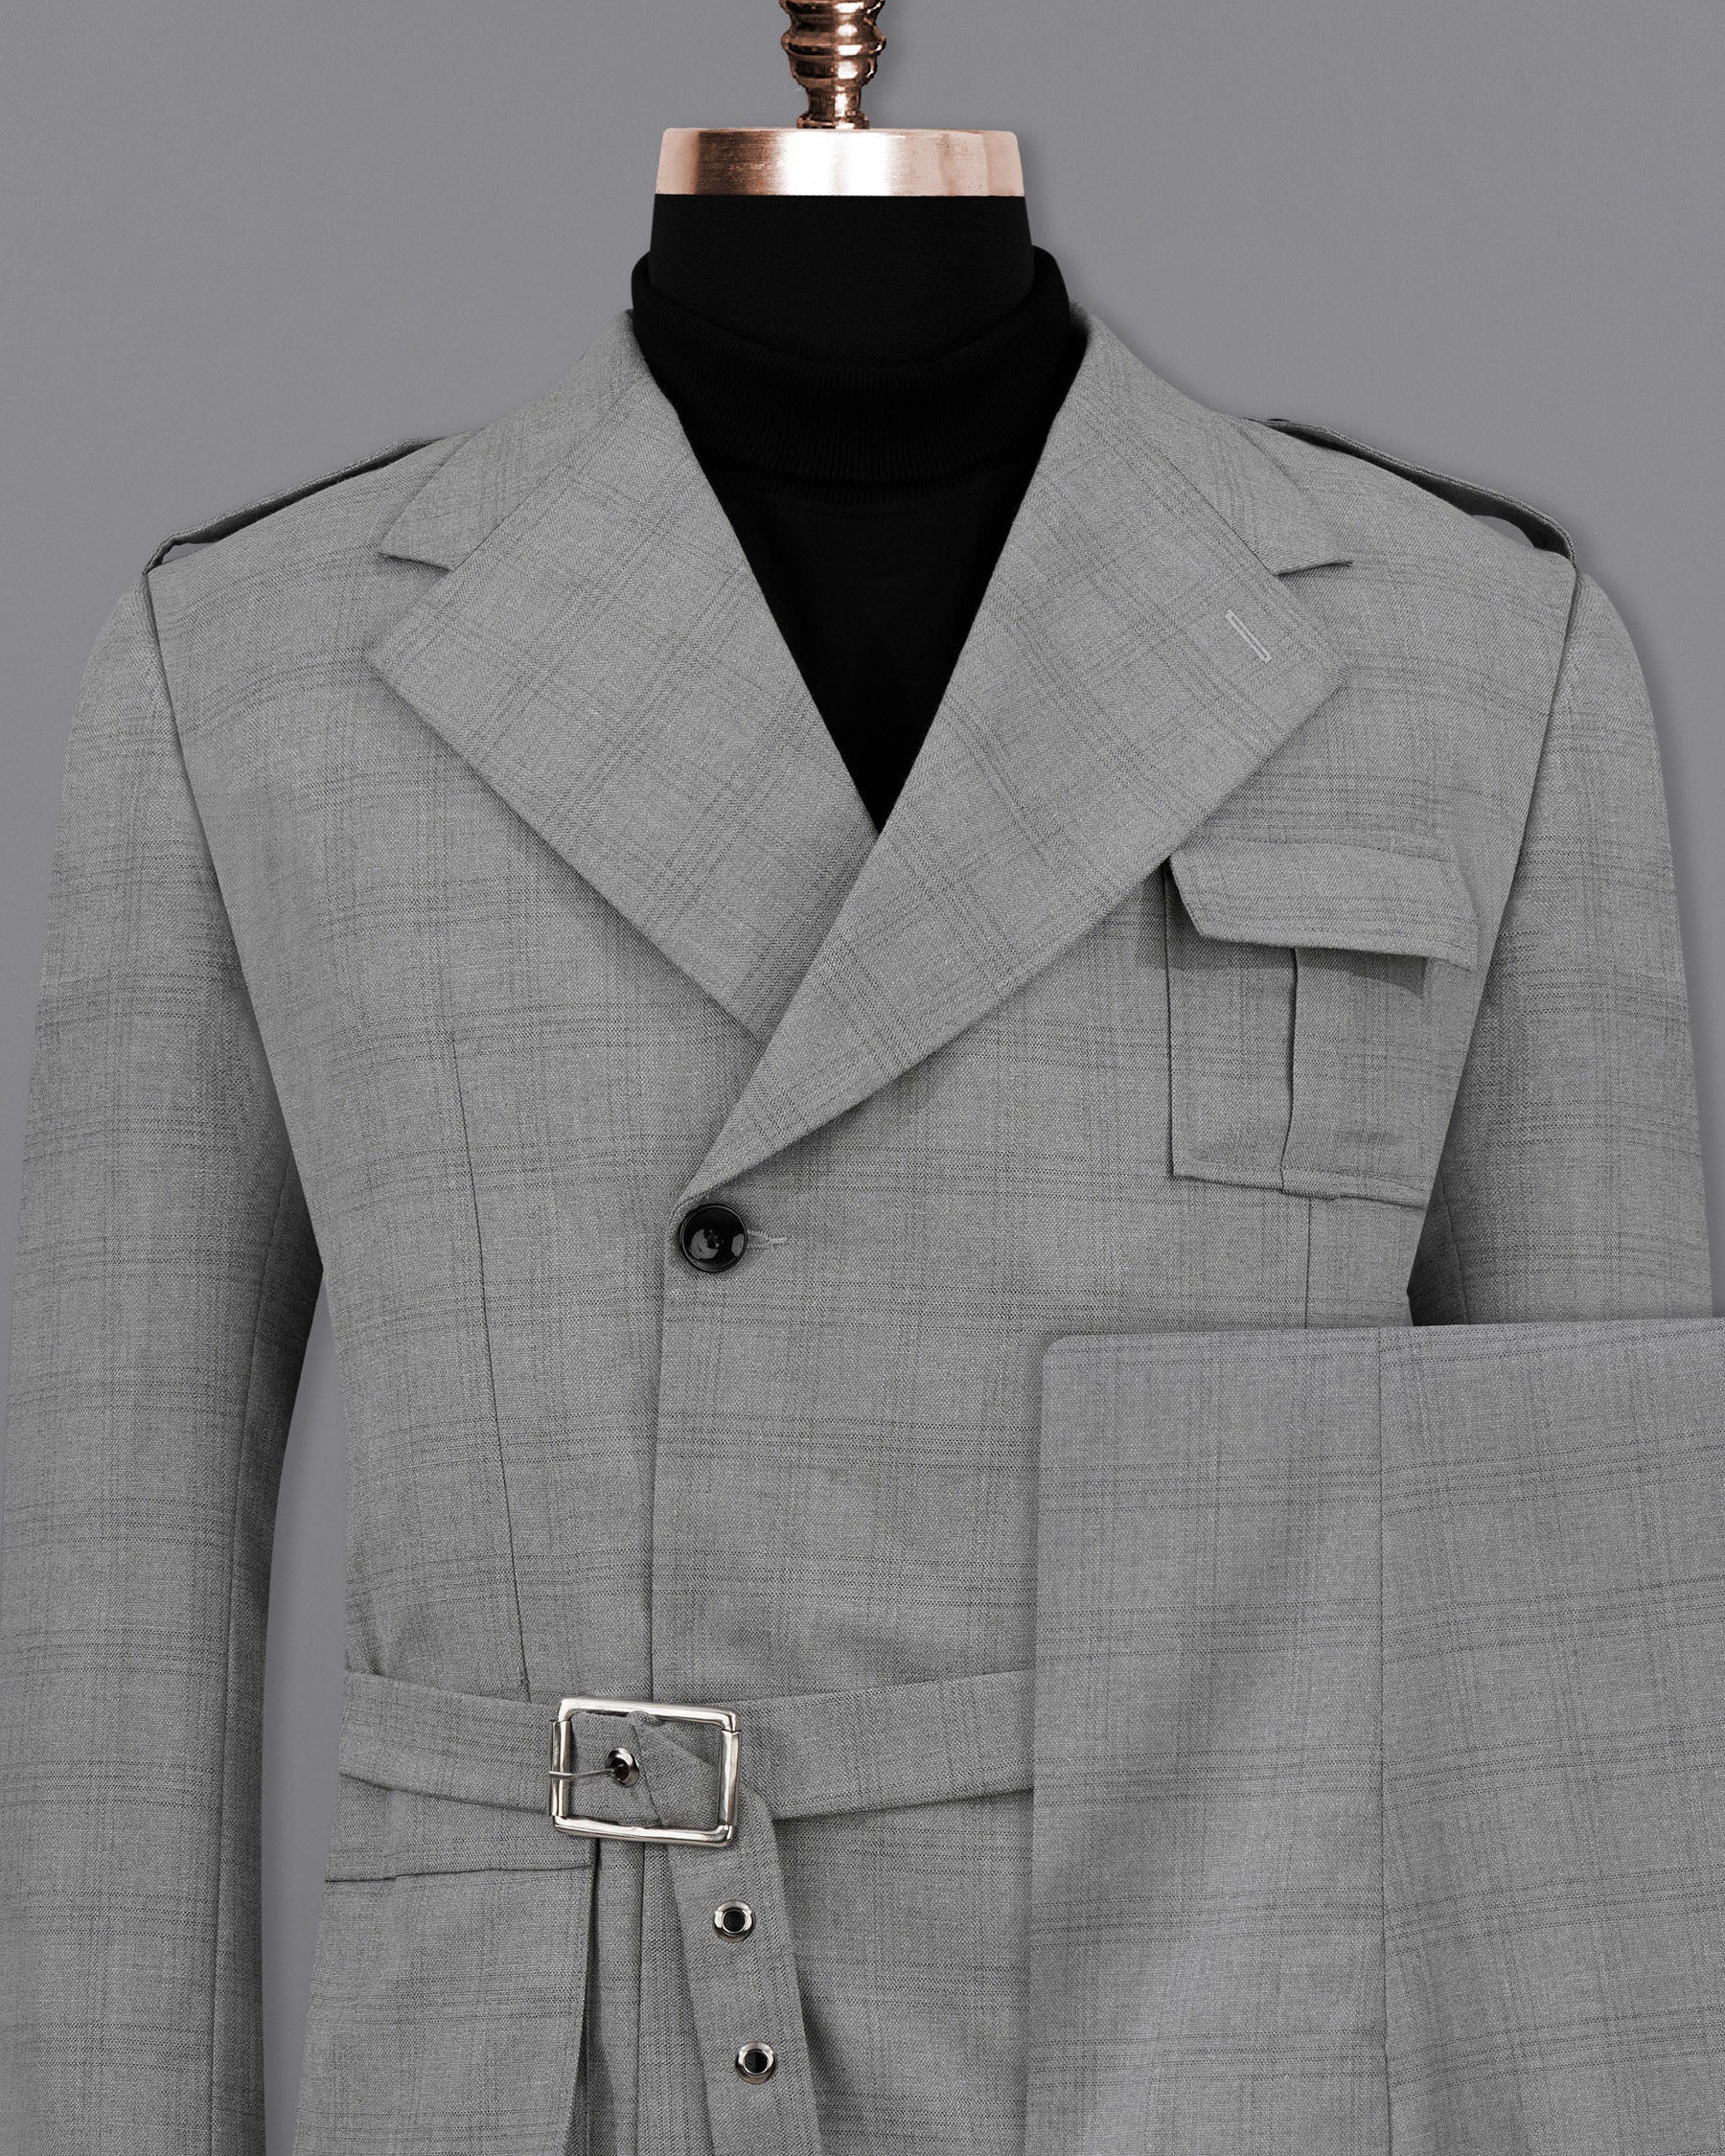 Stack Steel Color Double Breasted Subtle Plaid Designer Suit with Belt Closure